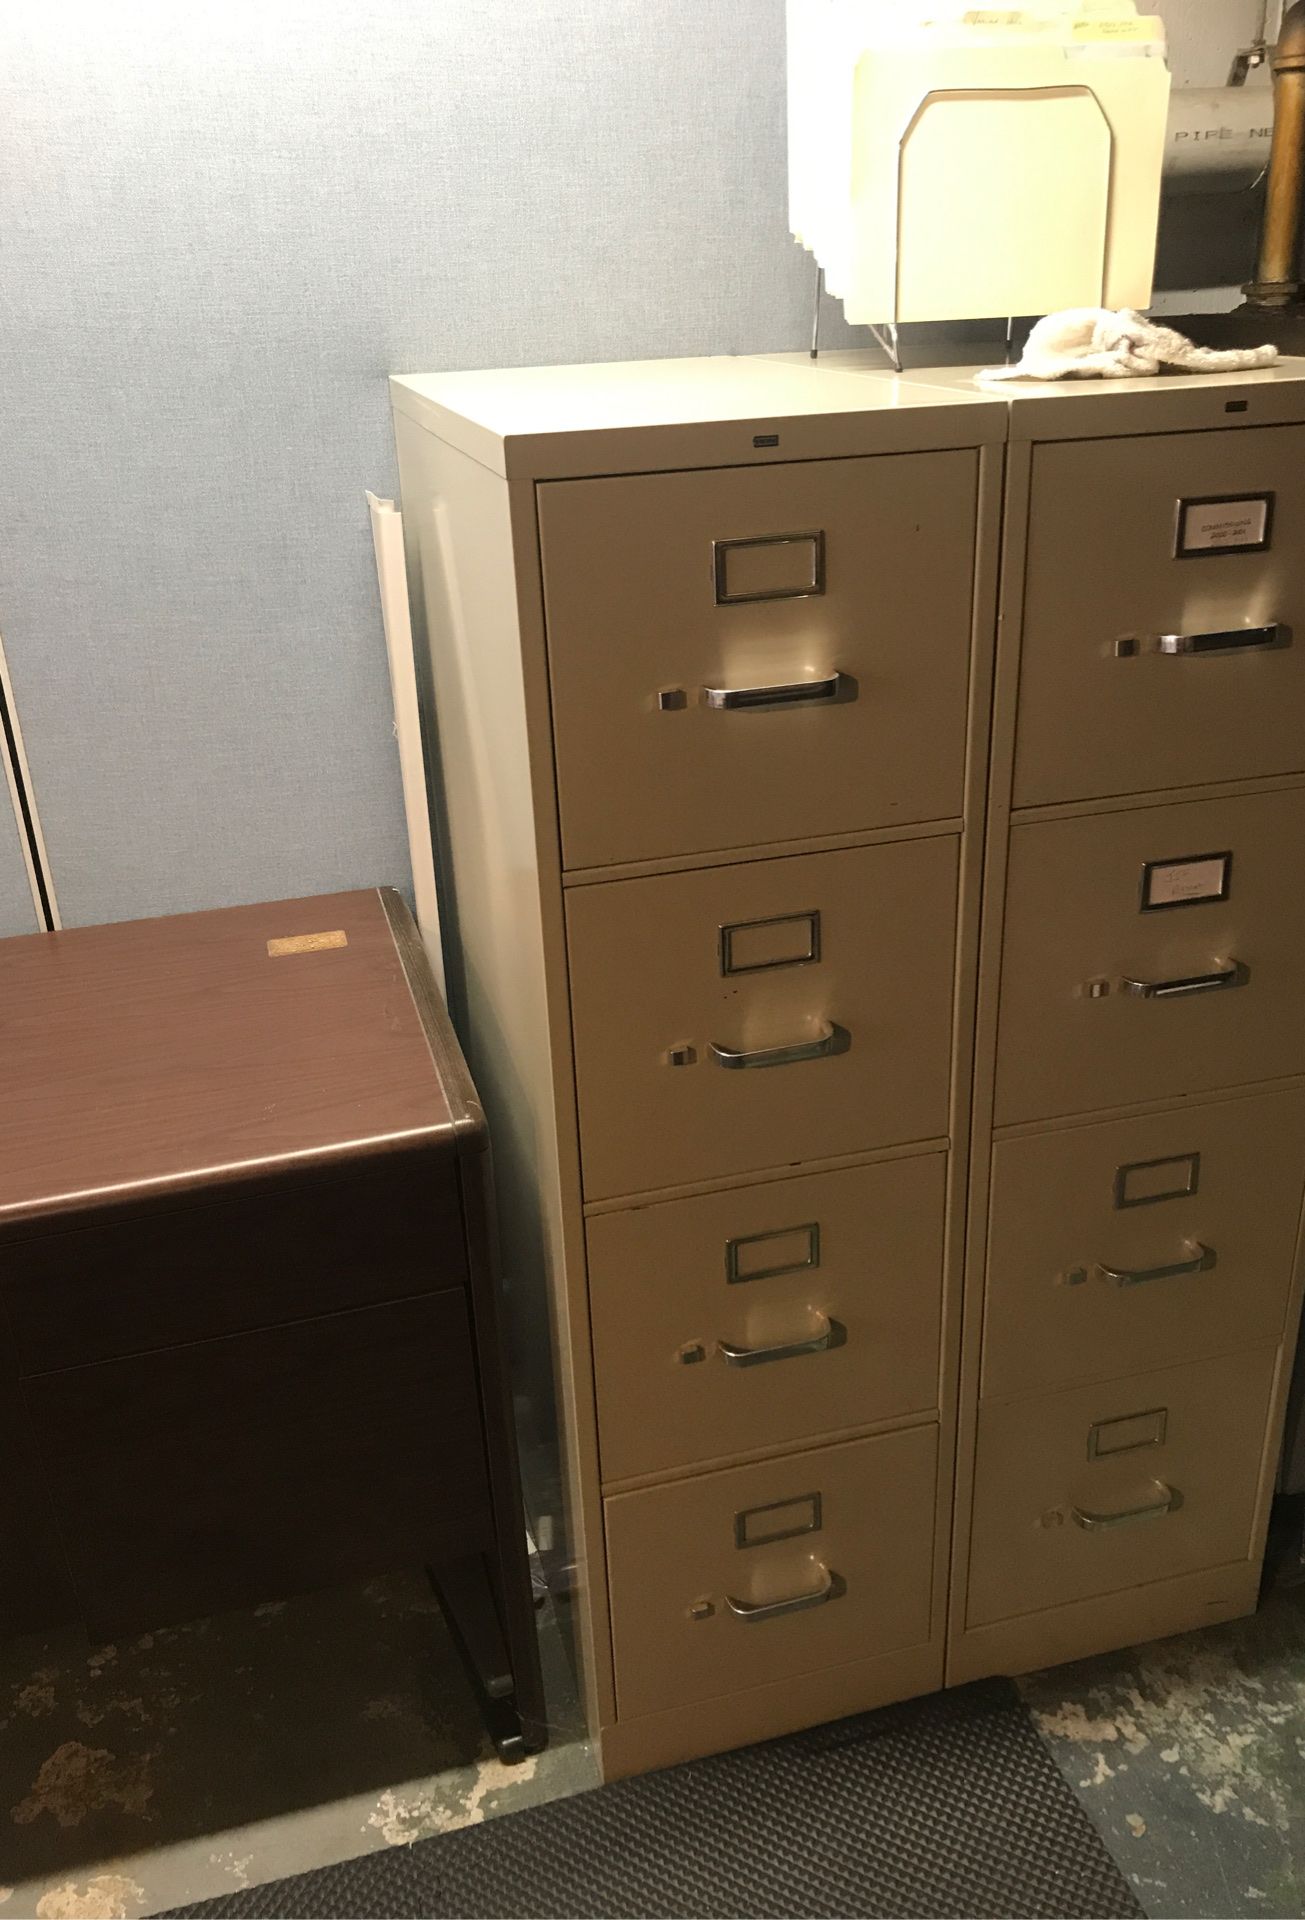 HON 4-Drawer File Cabinet